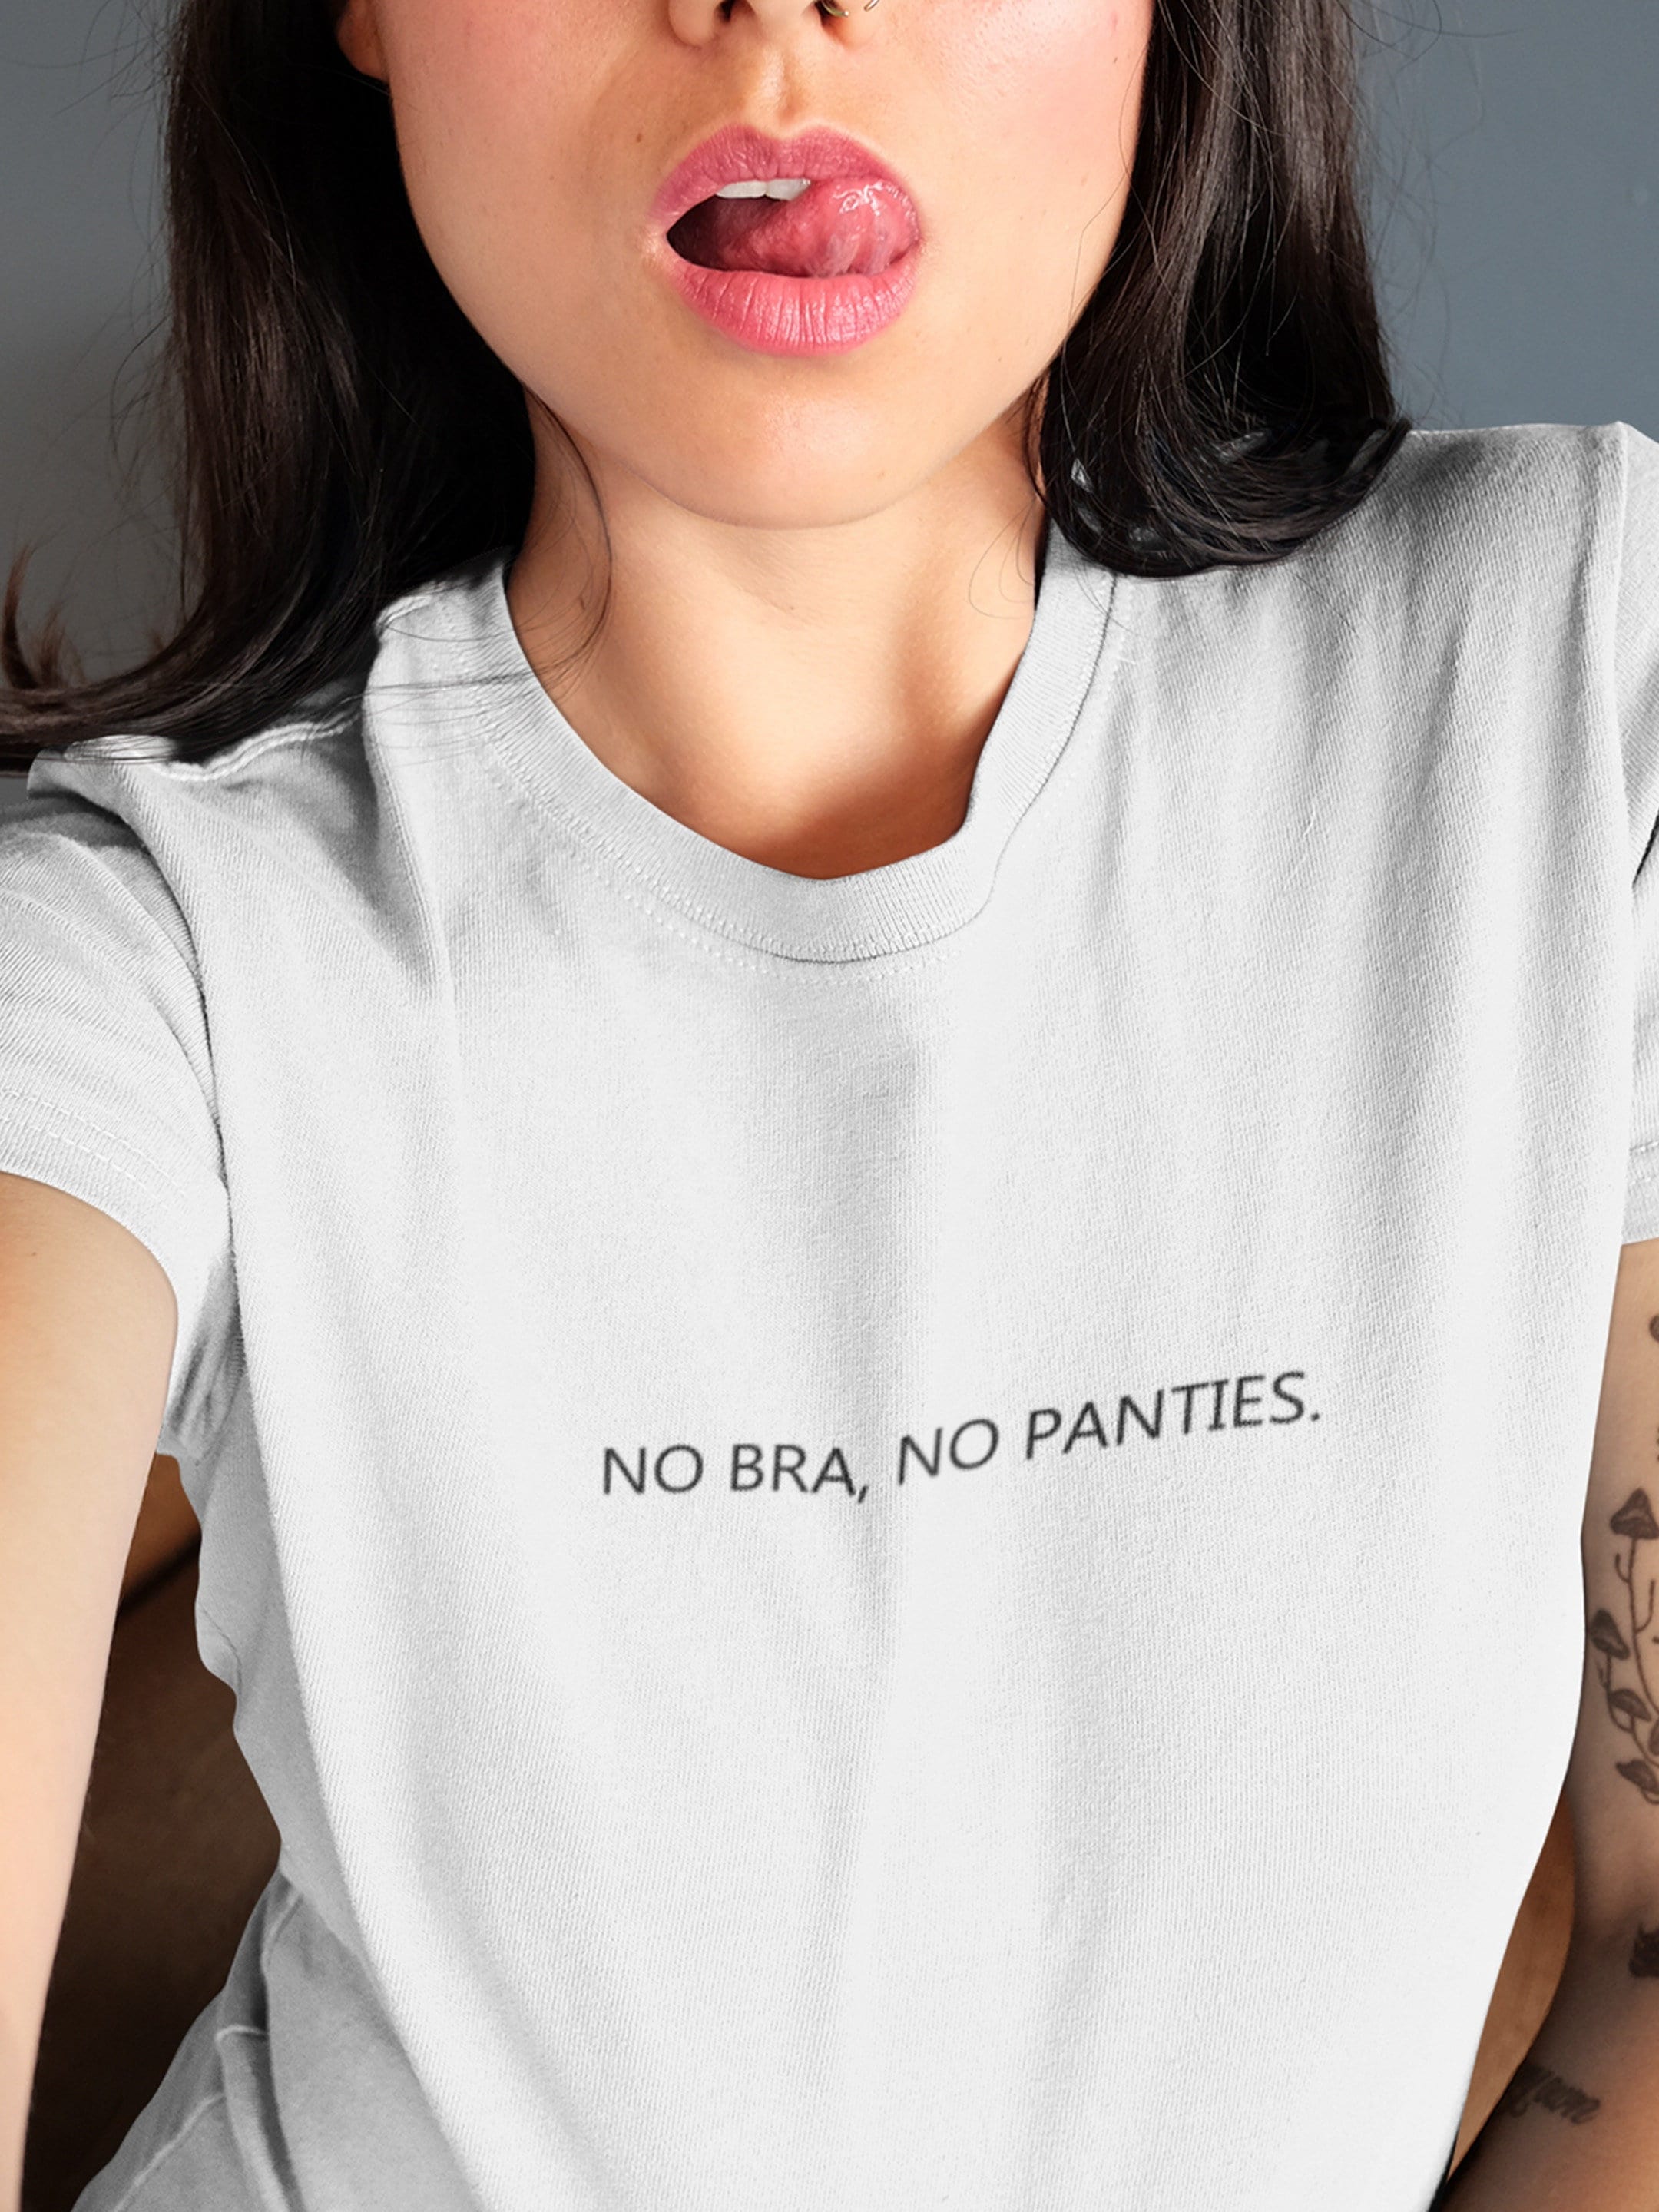 ambica prakash recommends No Bra No Panties Shirt